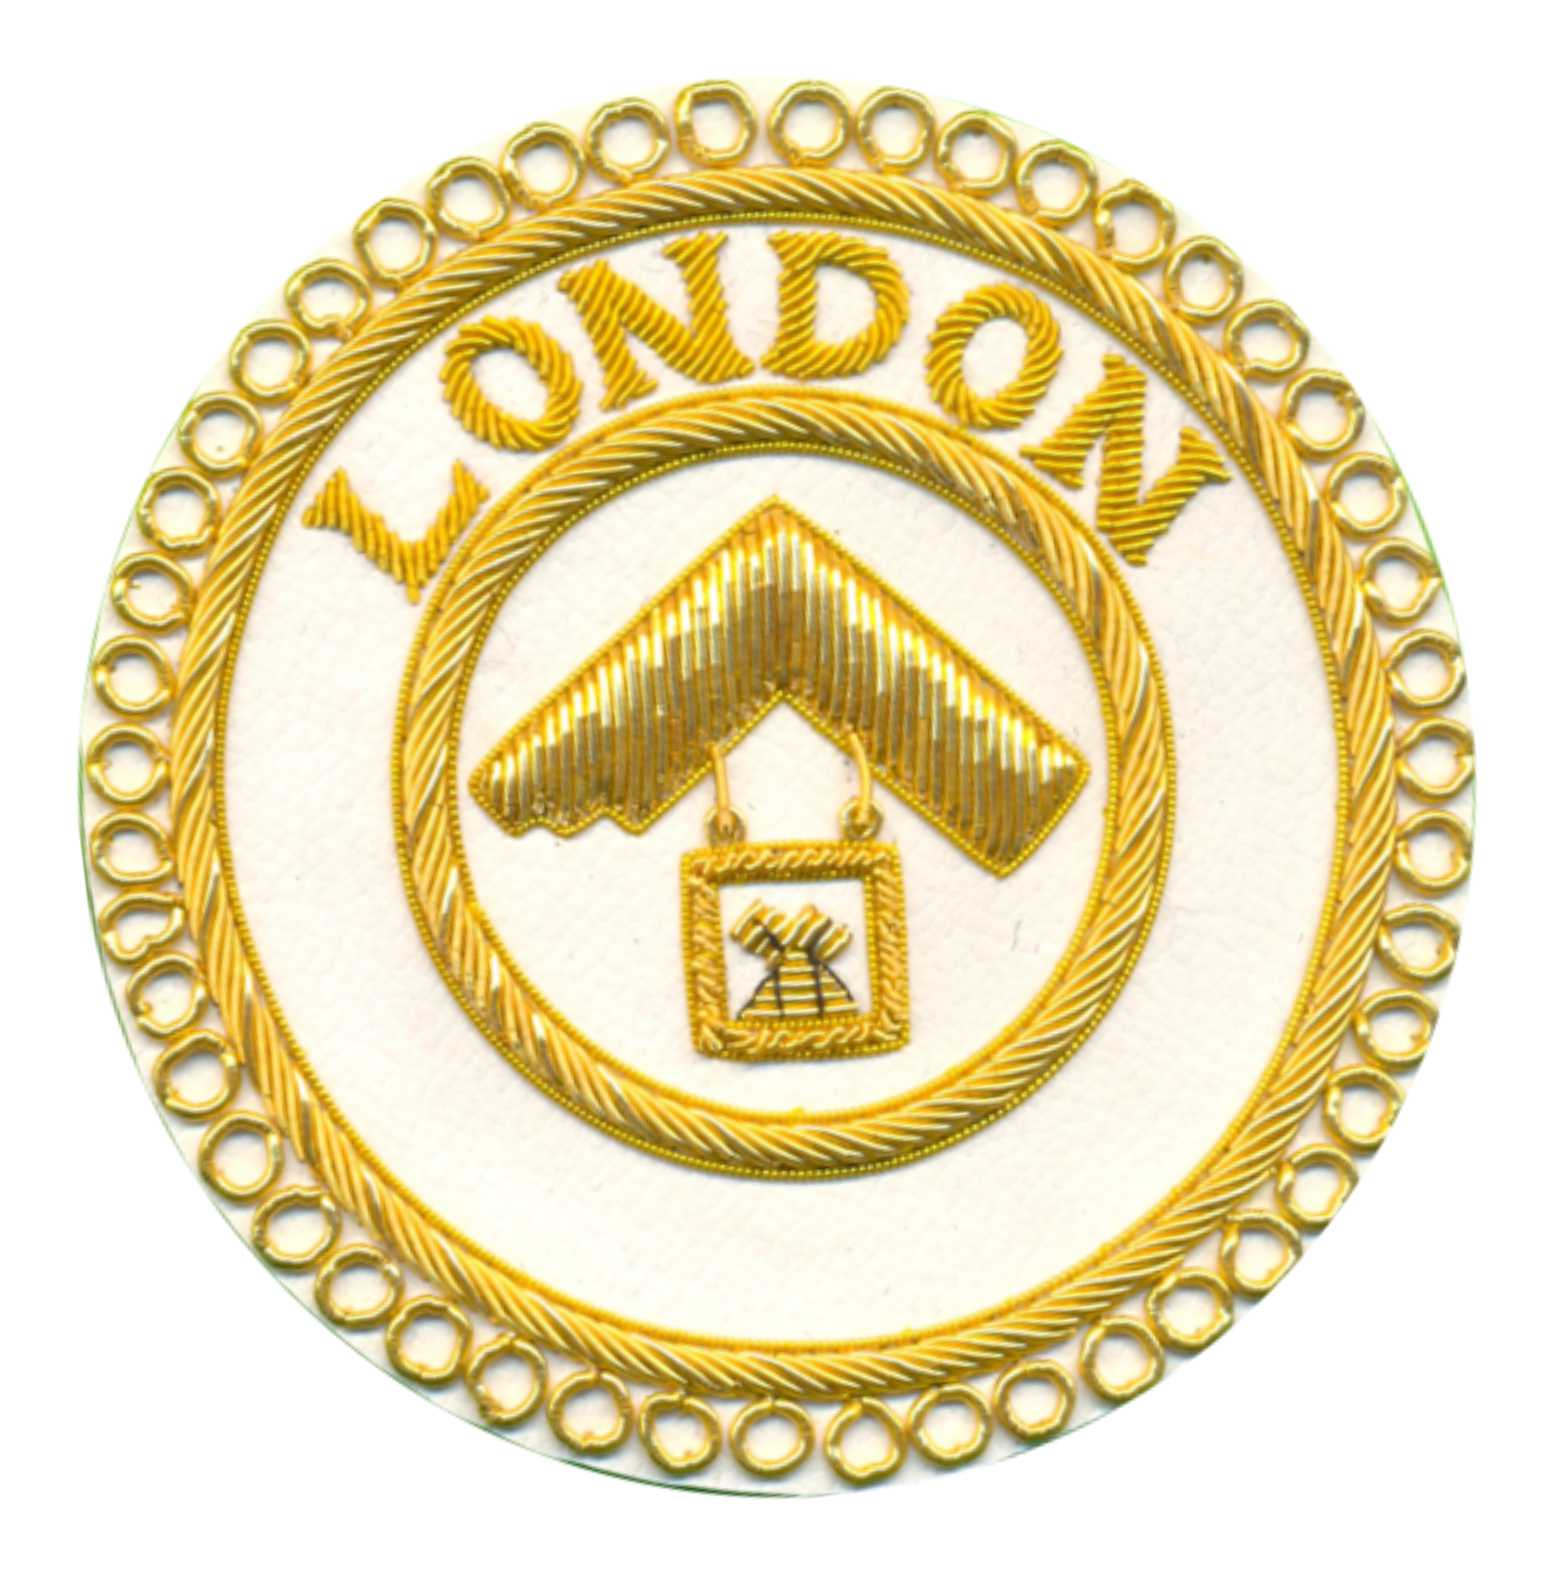  London Masonic Badge